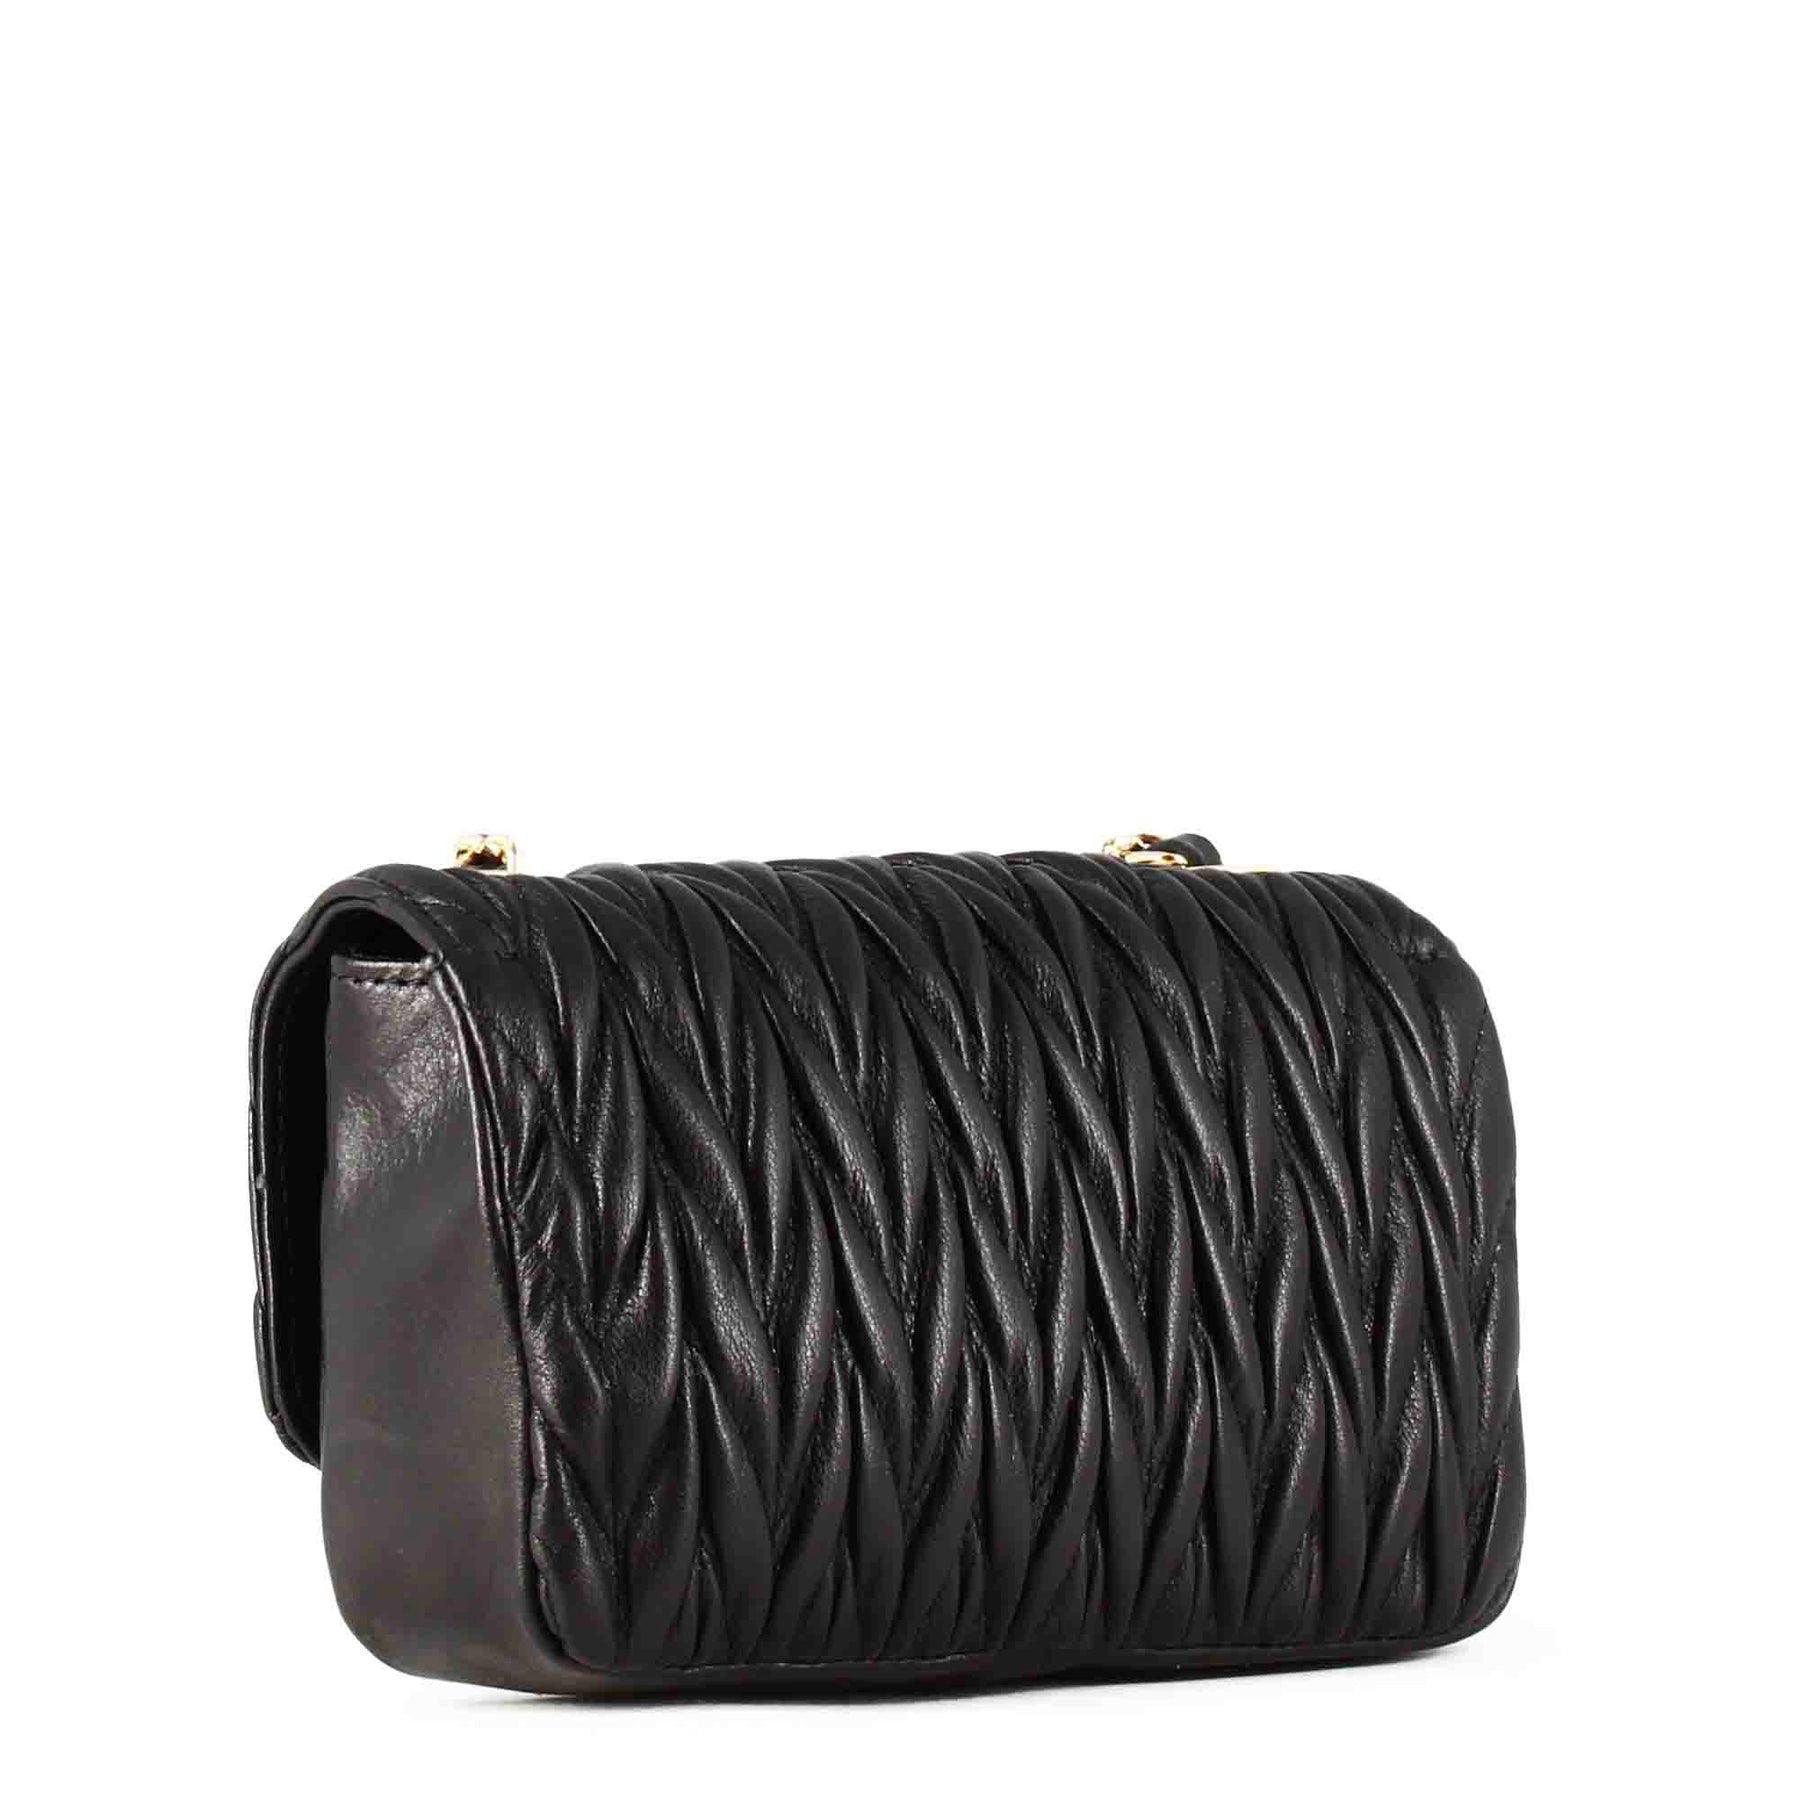 Women's handbag in black leather with jewel shoulder strap